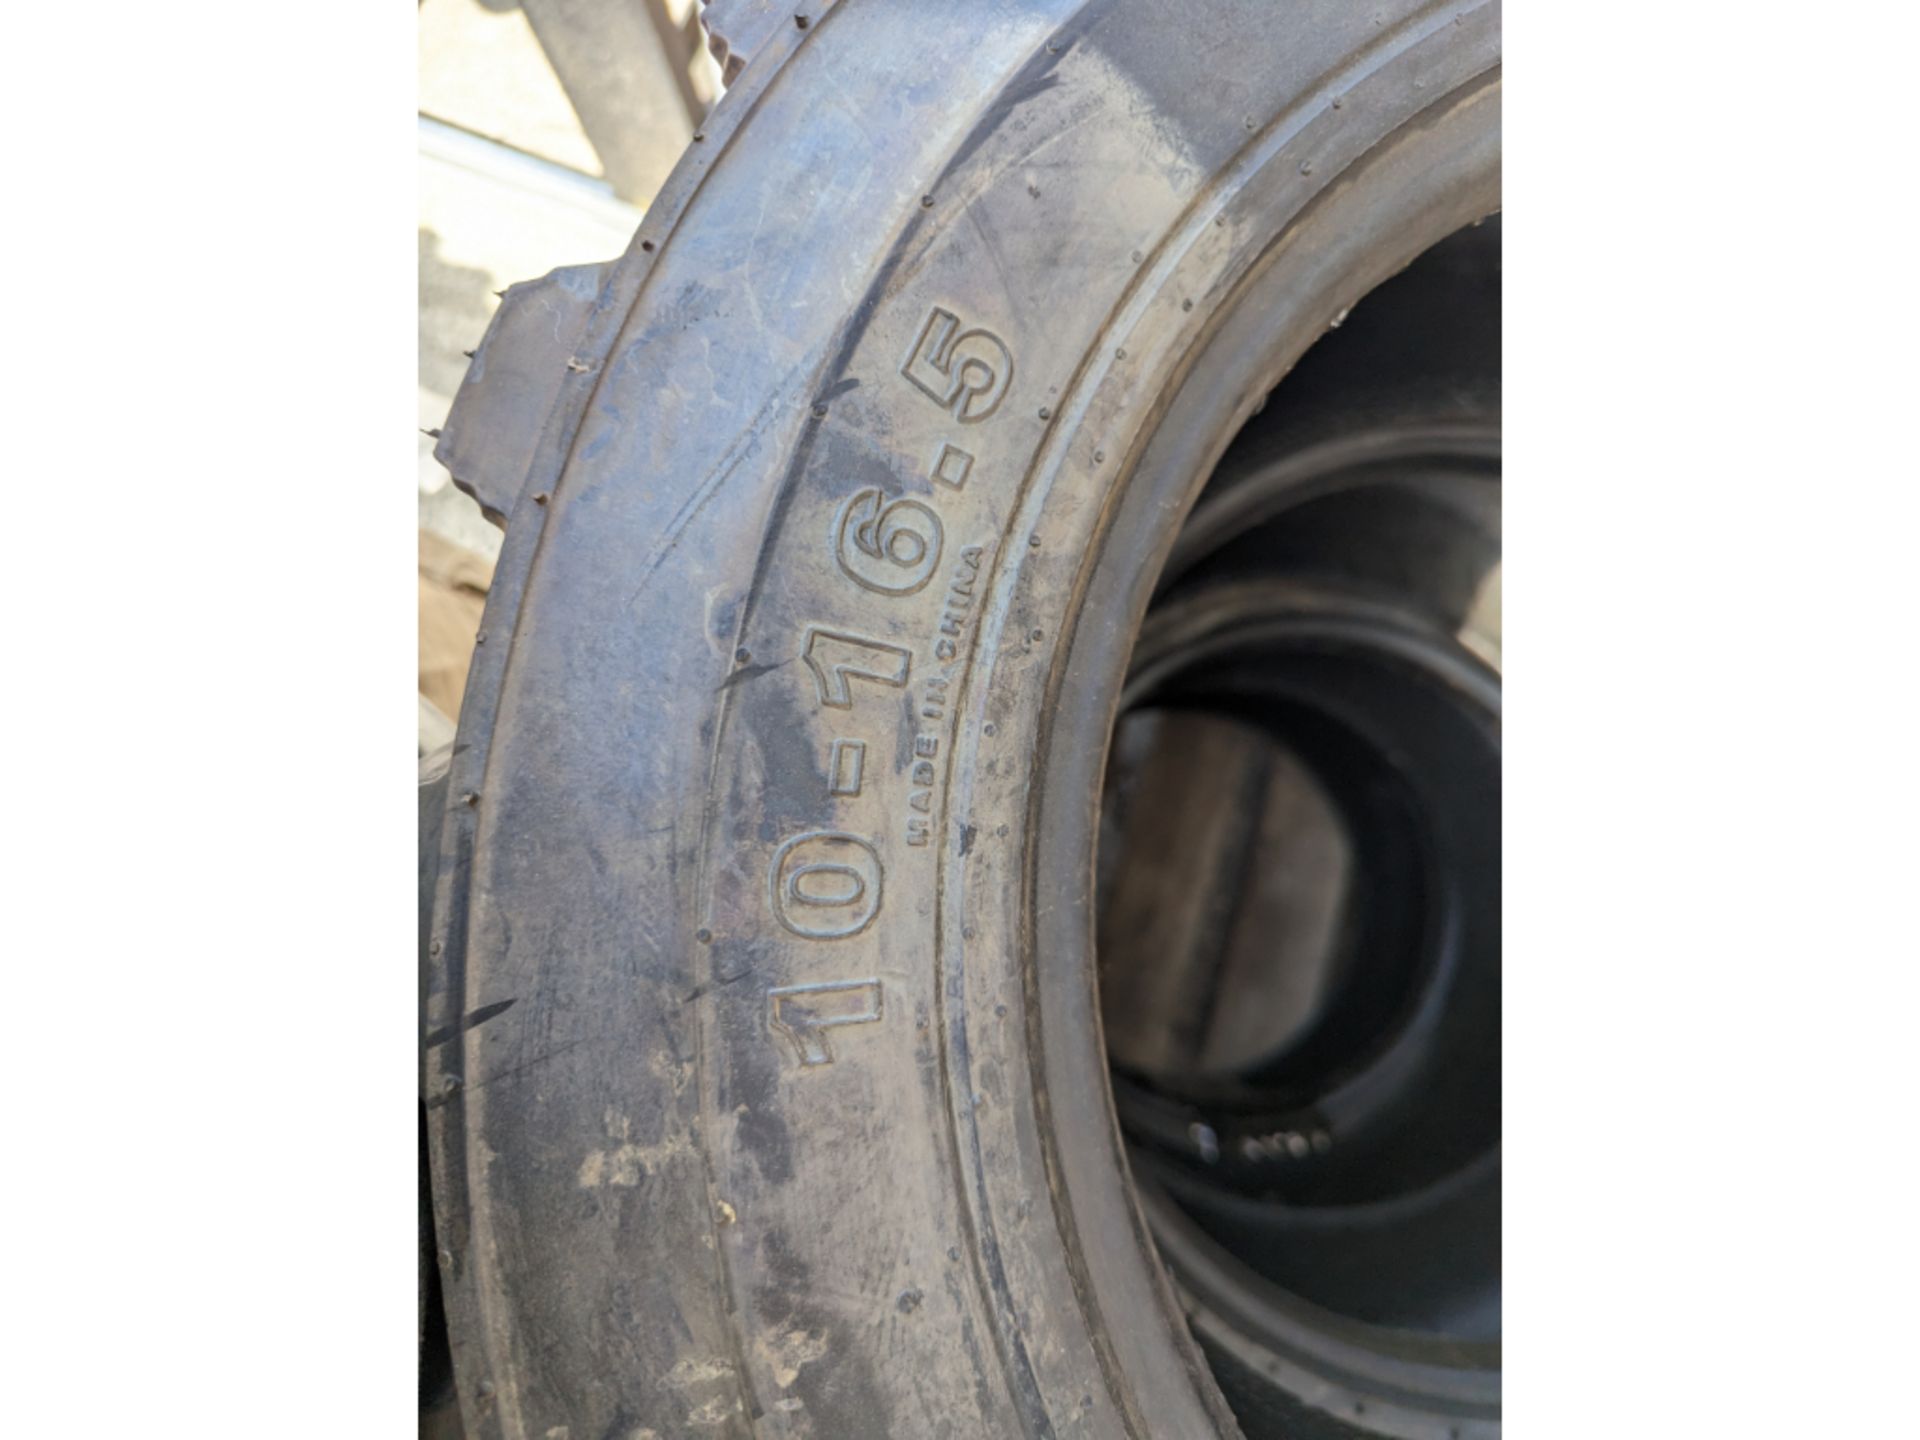 4 NEW Road Crew SKS-1 Skid Steer Tires, 1 Used Tire, 10-16.5 - Bild 6 aus 10